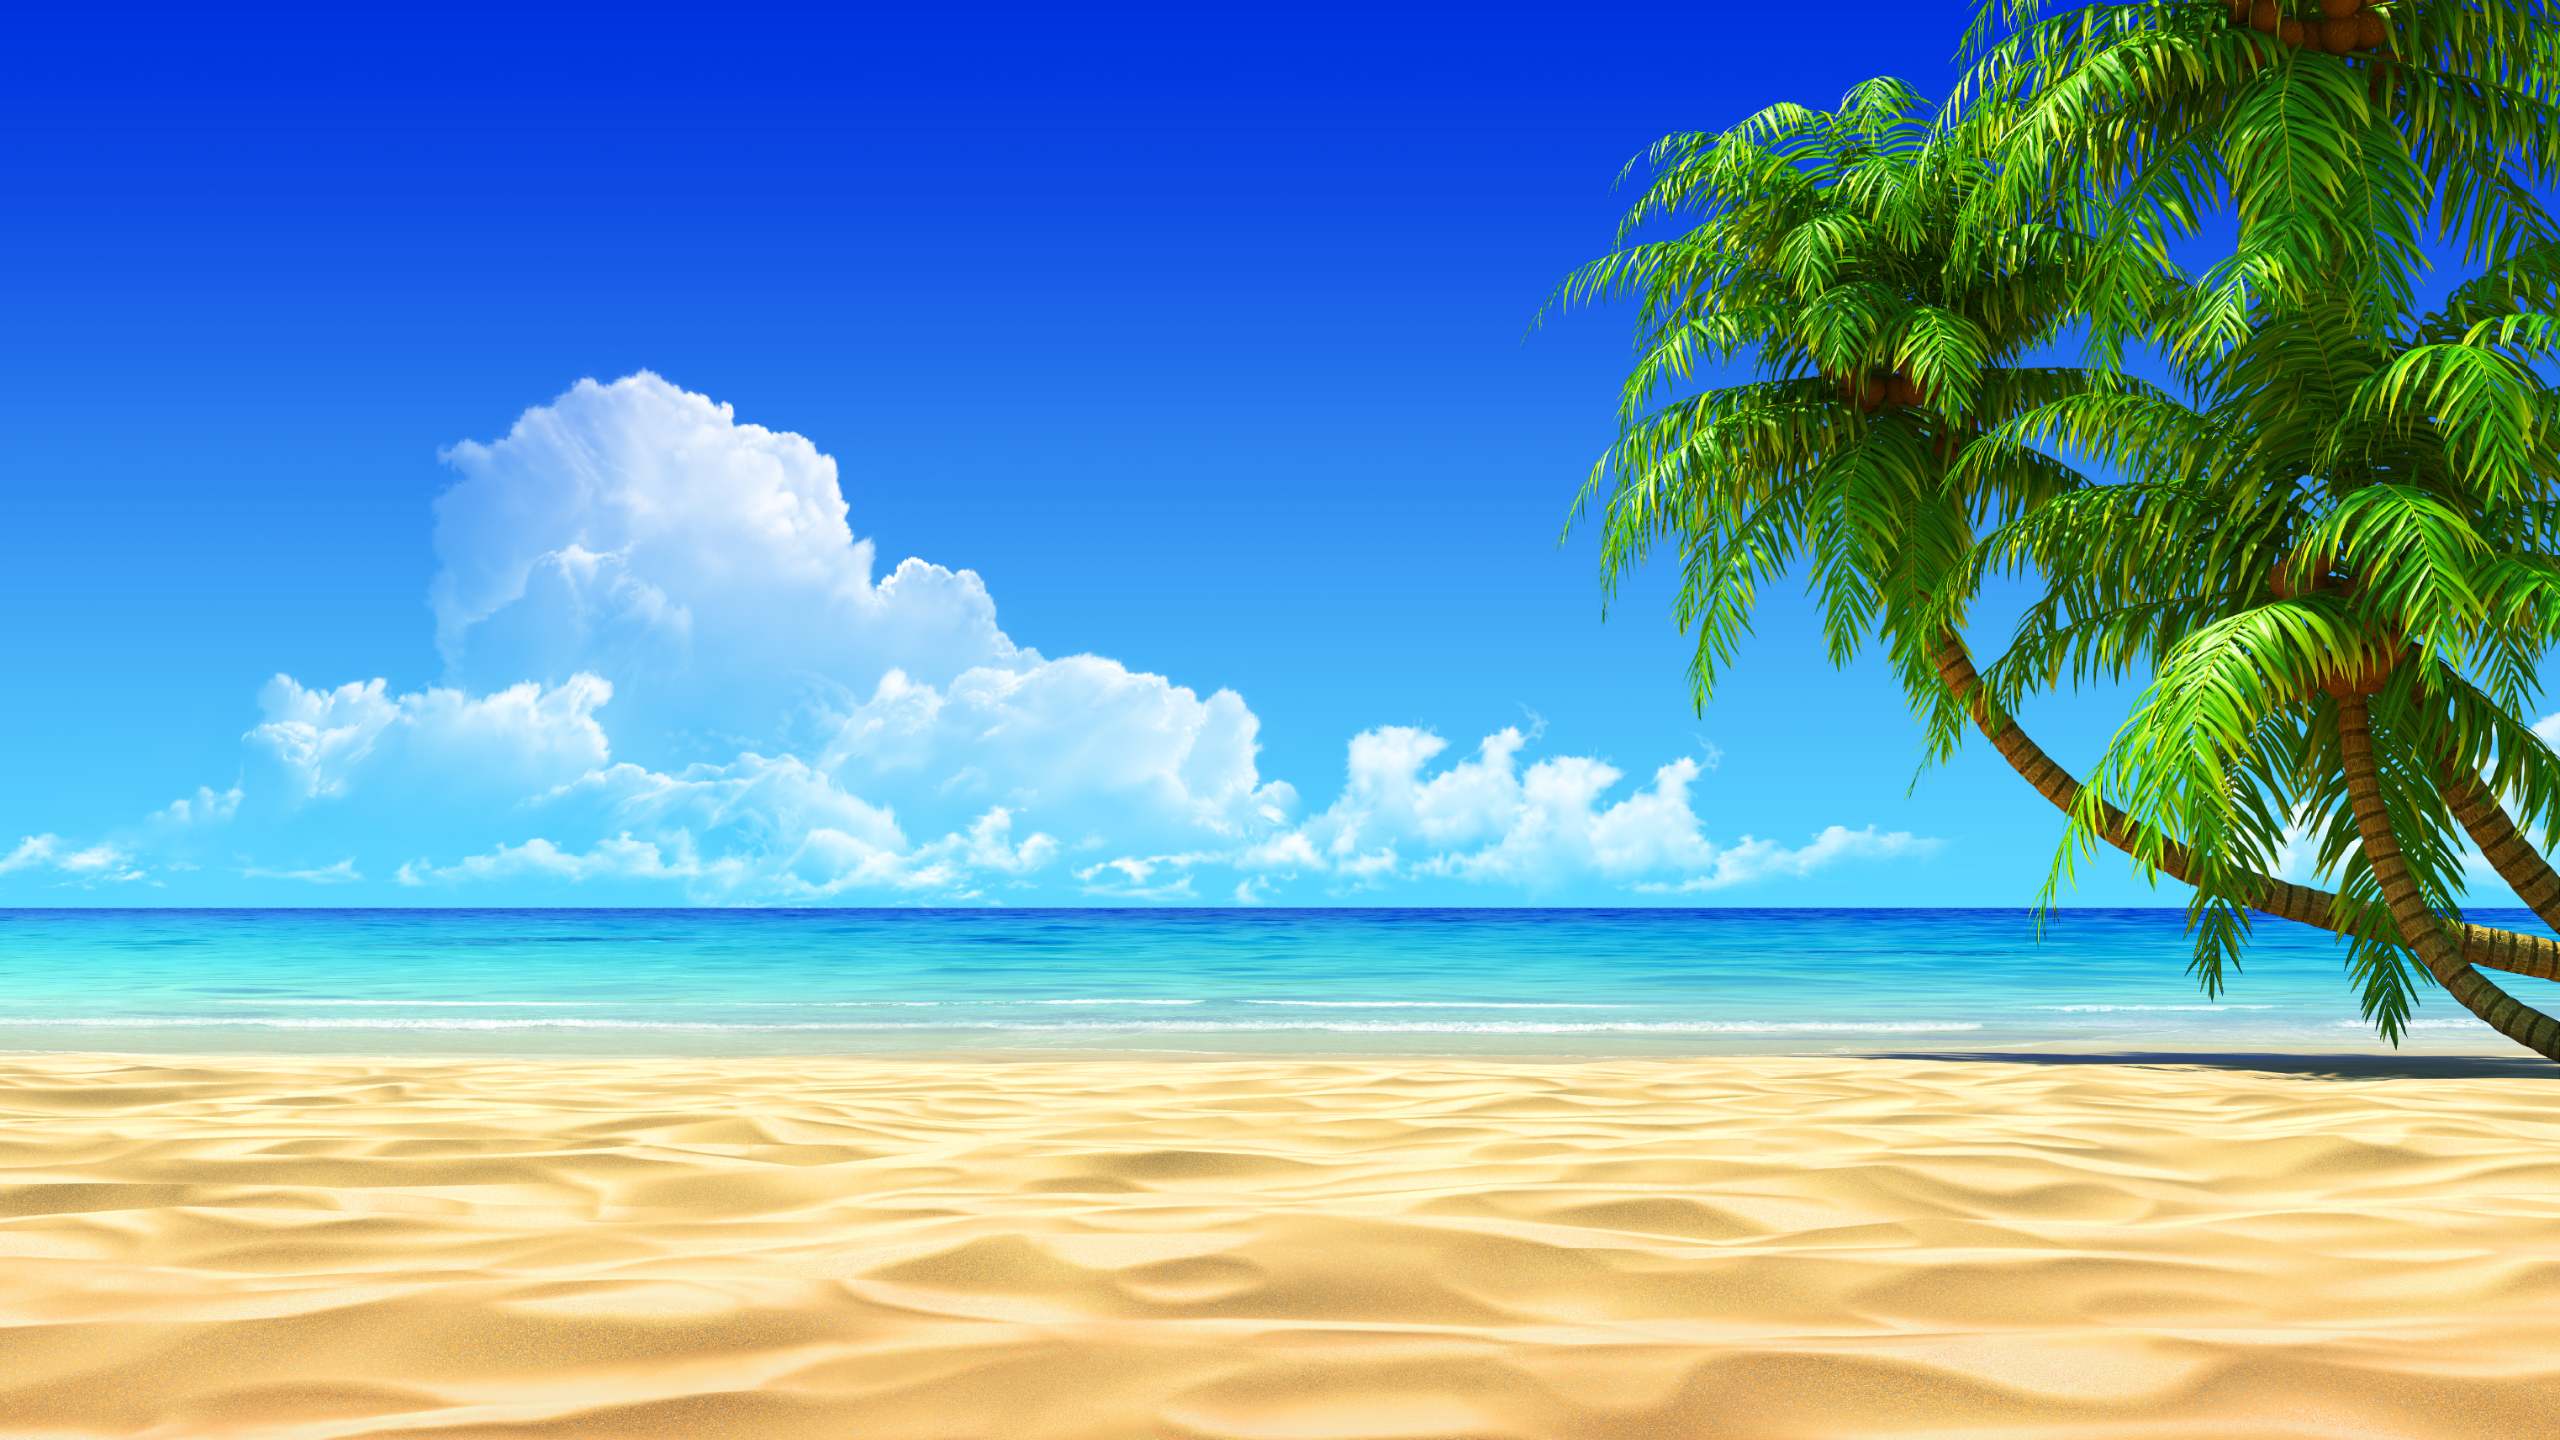 wallpaper widescreen free awesome tropical beach desktop background